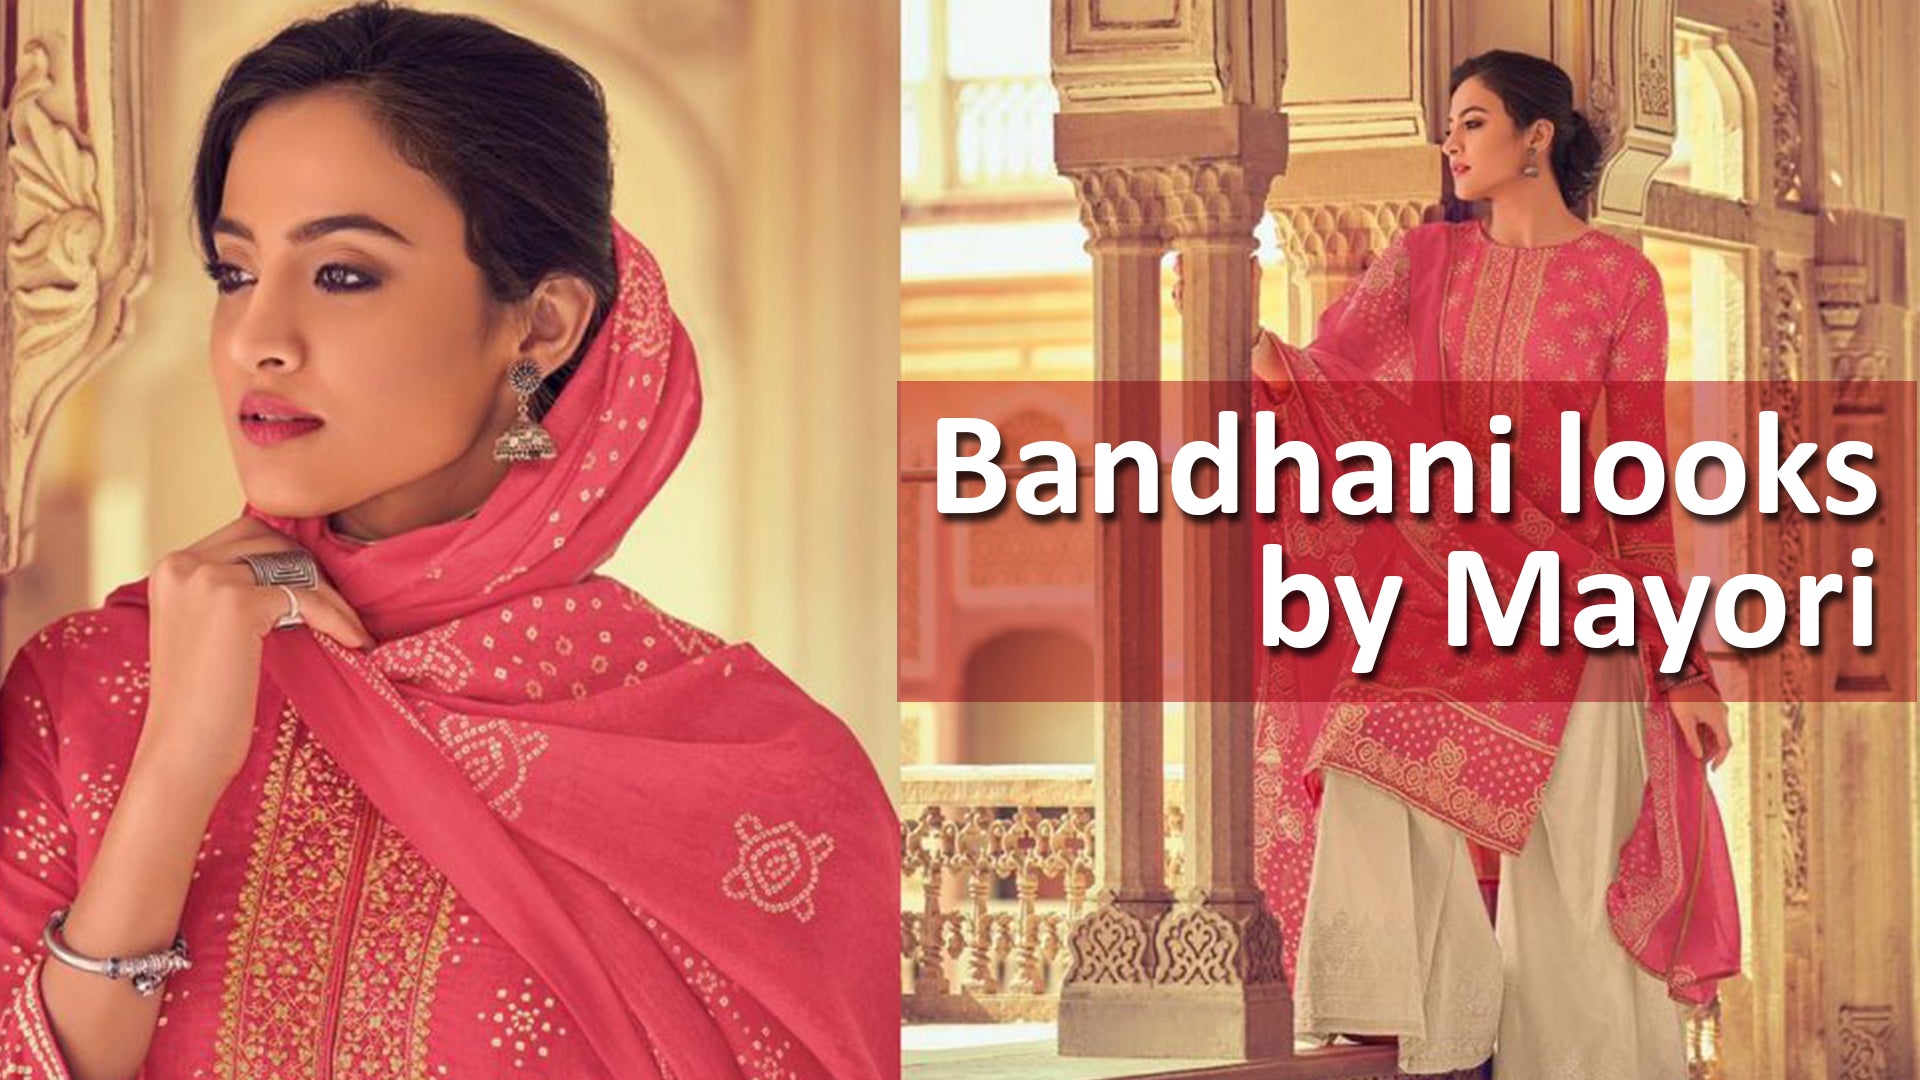 Bandhani looks by Mayori